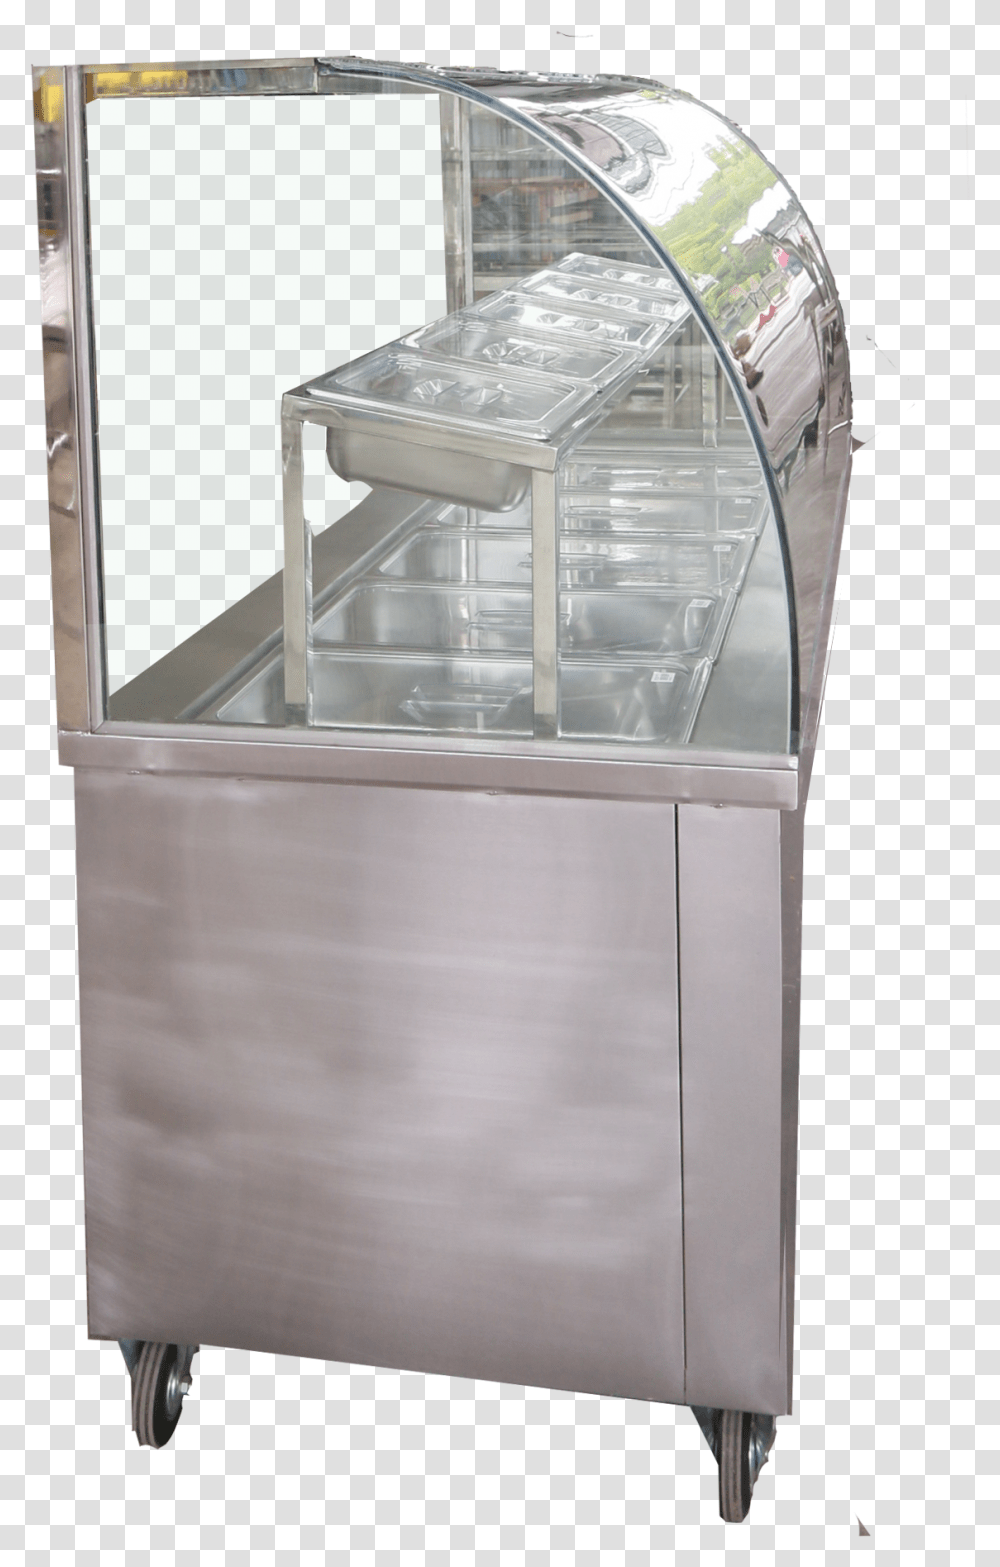 Chair, Appliance, Dishwasher, Refrigerator, Cooler Transparent Png